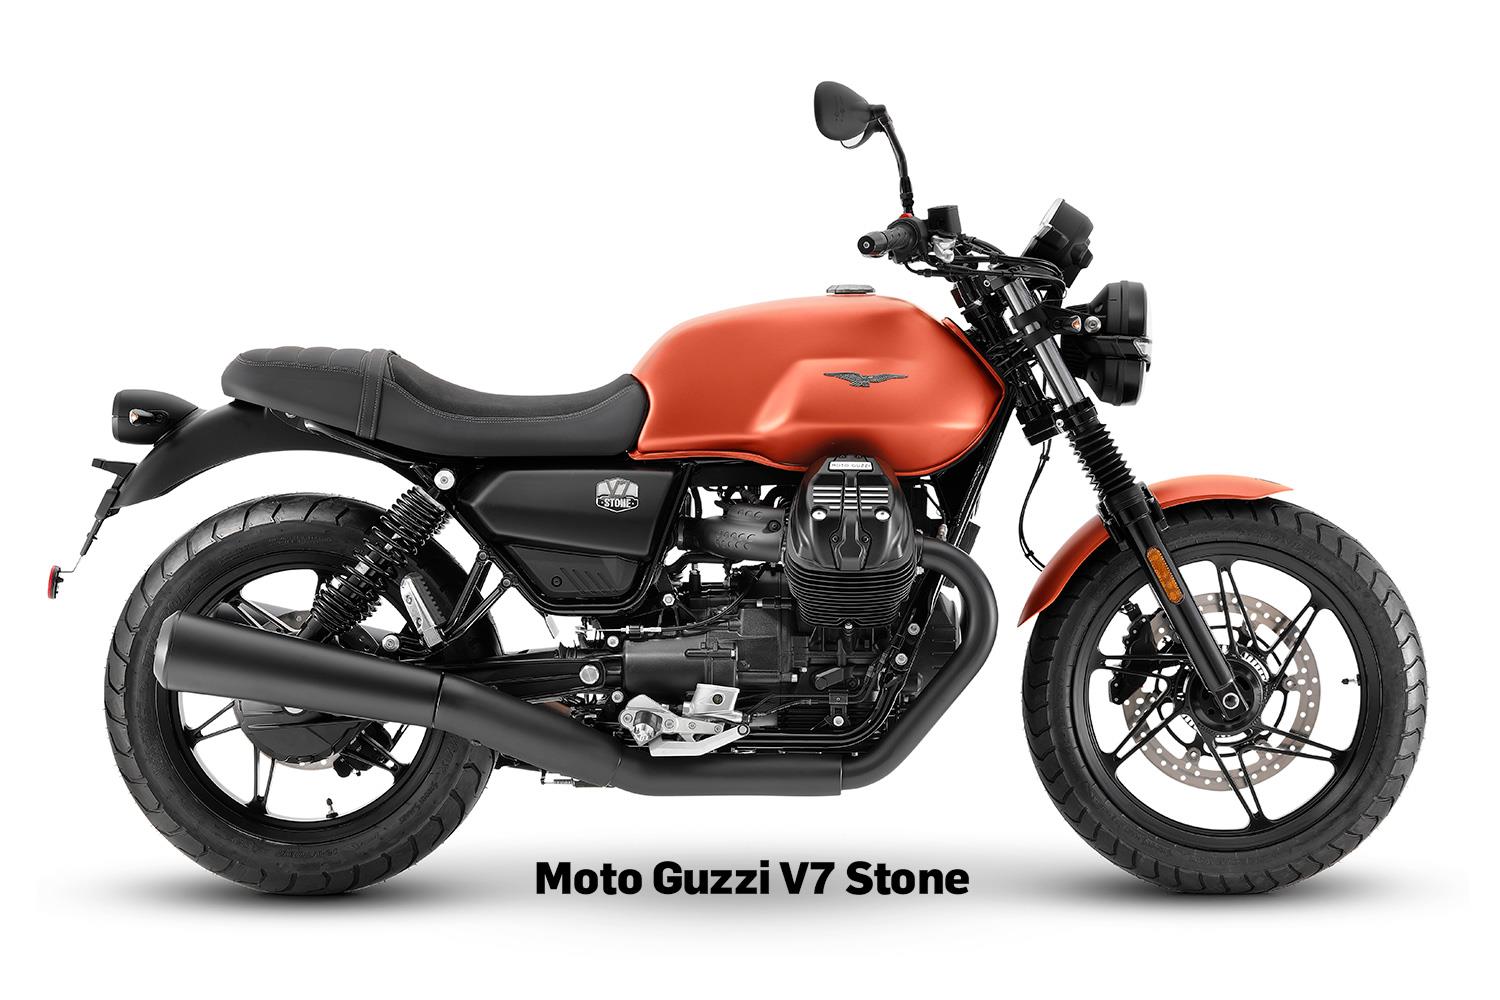 Read MCN's expert Moto Guzzi V7 long-term test here